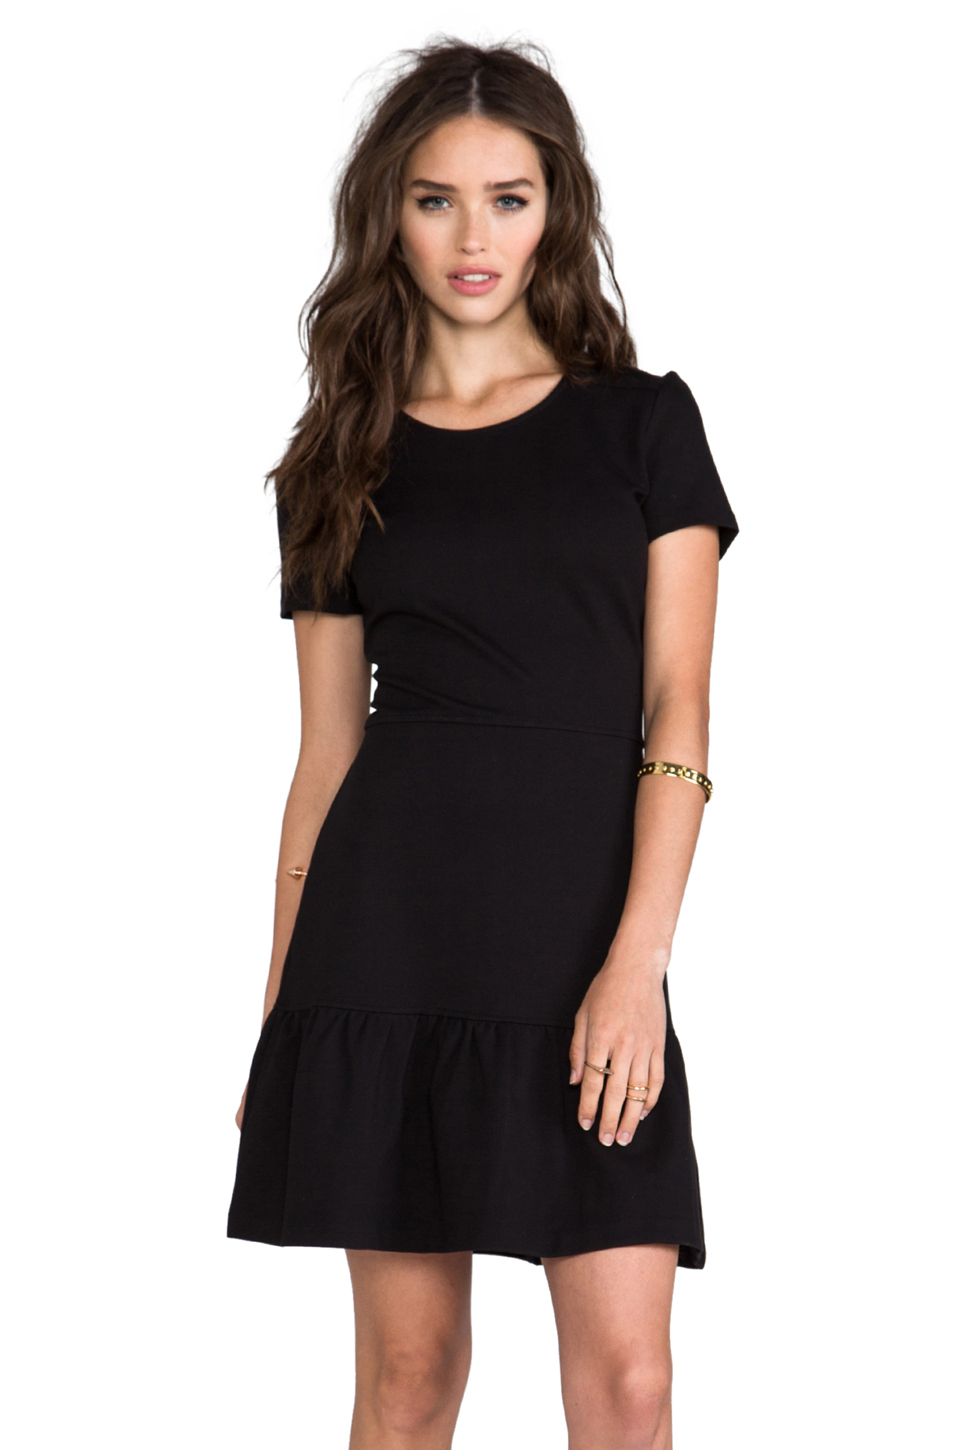 Lyst - Juicy Couture Solid Ponte Flirty Dress in Black in Black